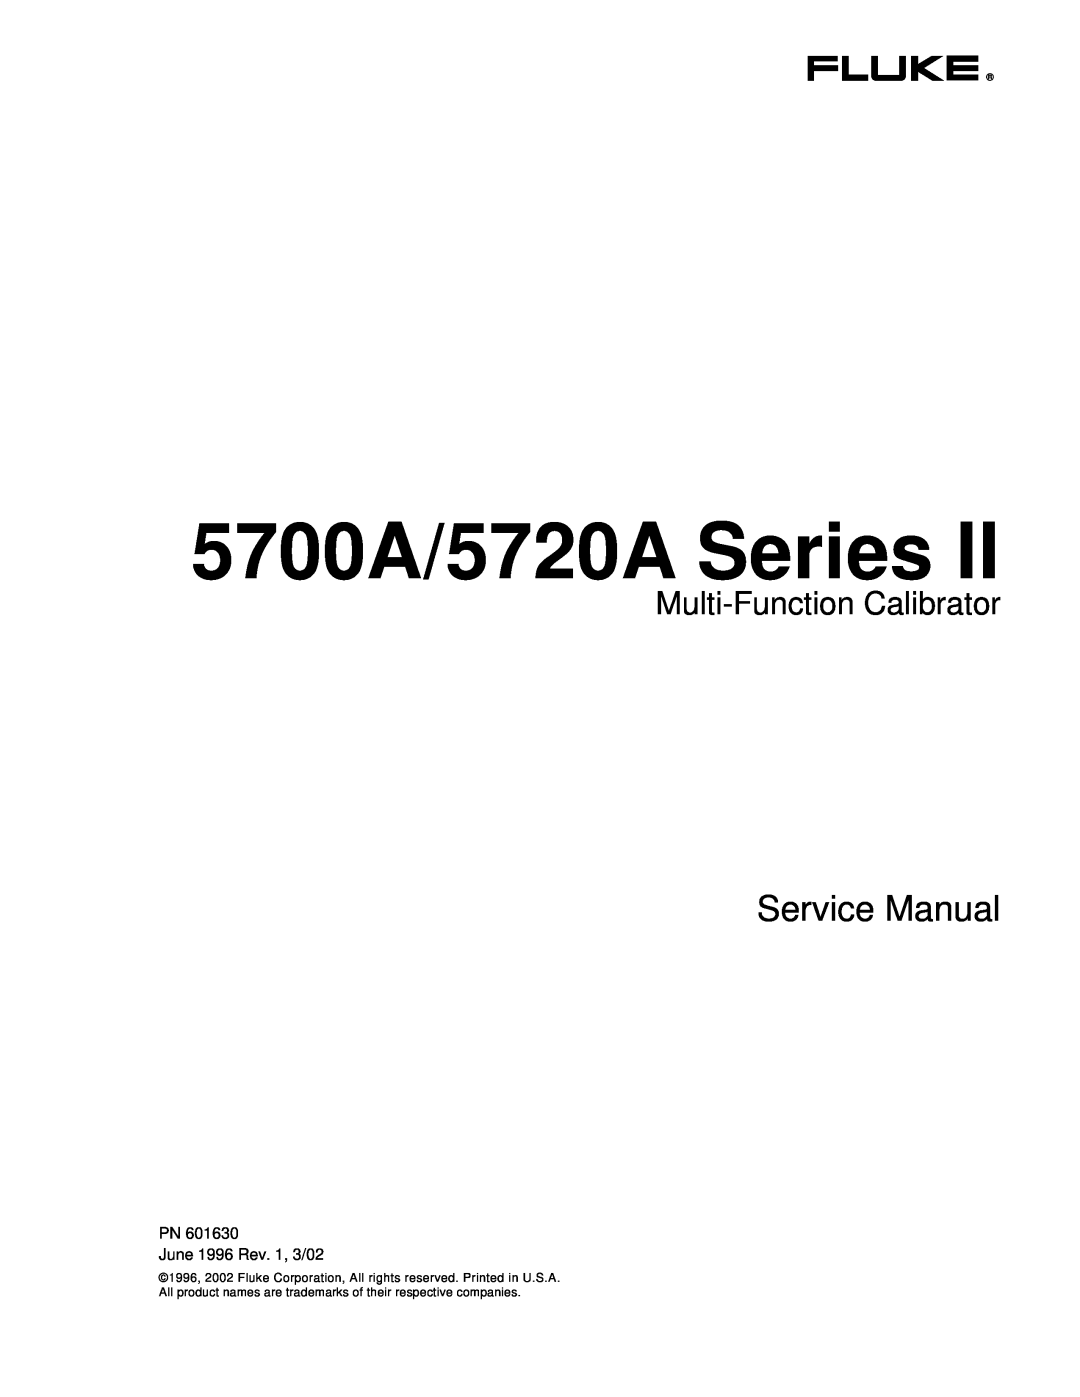 Fluke service manual 5700A/5720A Series, Service Manual, Multi-Function Calibrator 